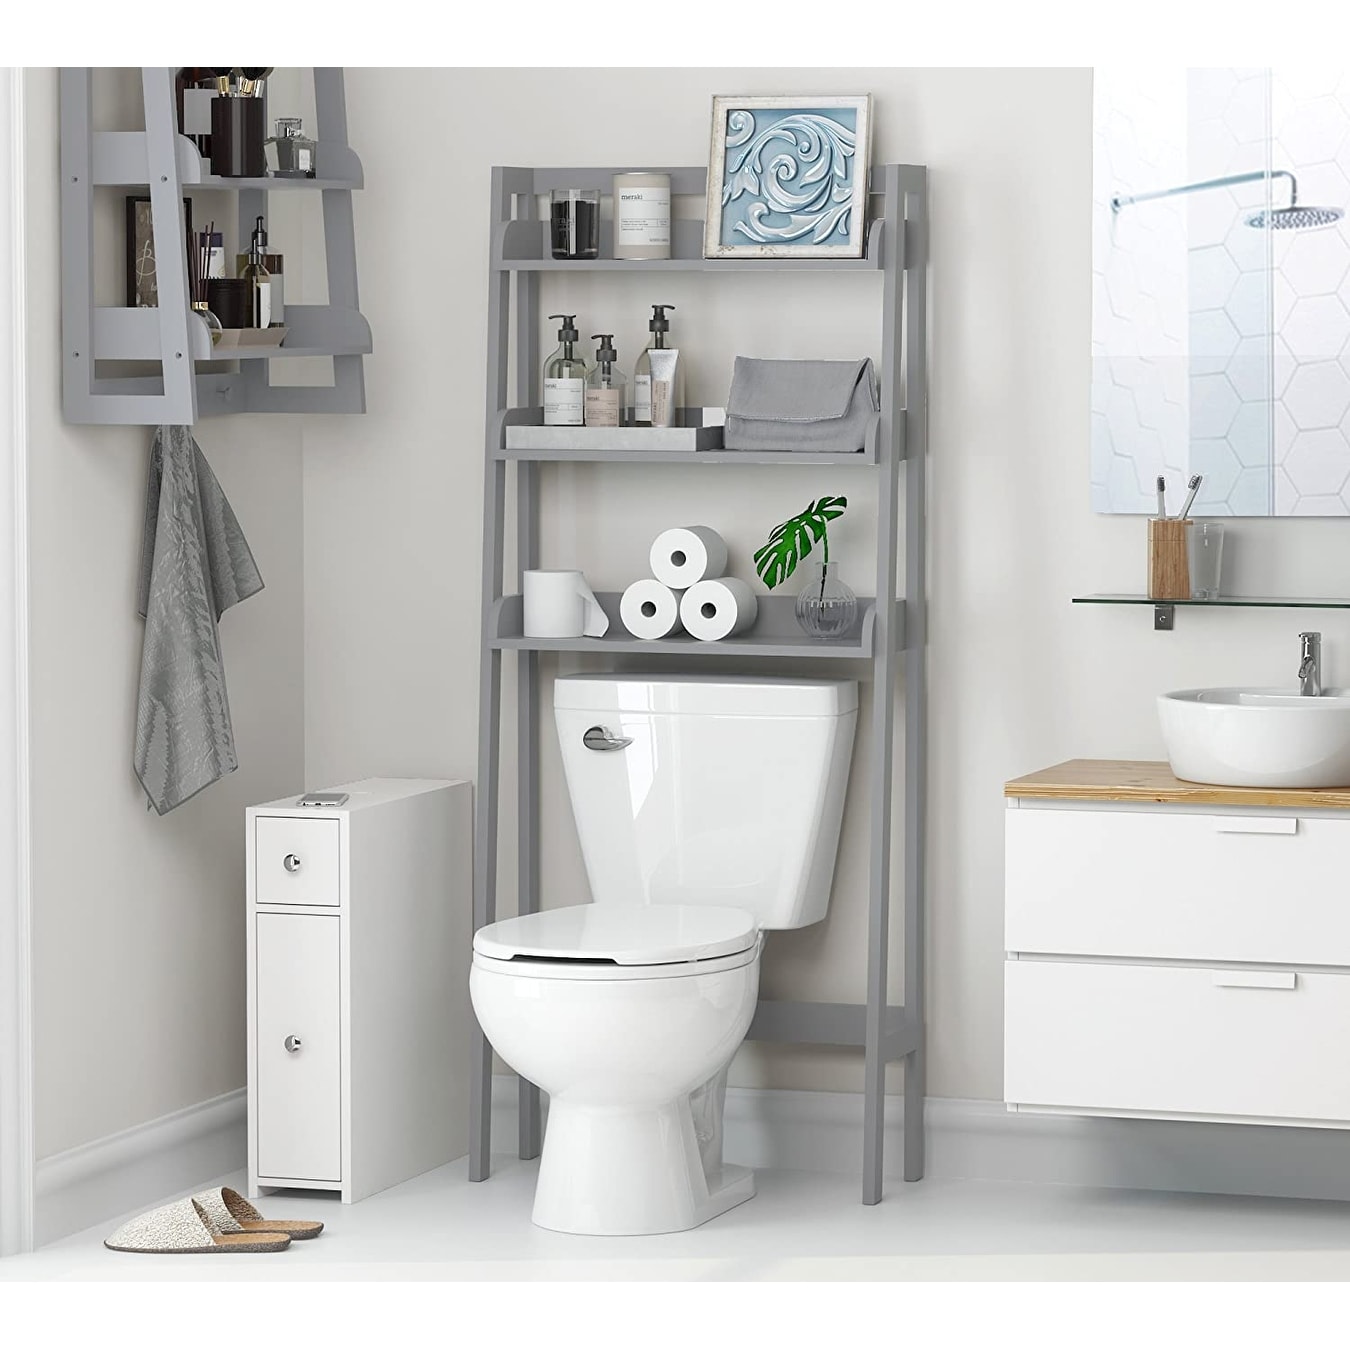 UTEX 3-Shelf Bathroom Organizer Over The Toilet, Bathroom Space saver,  Bathroom Shelf, White Finish